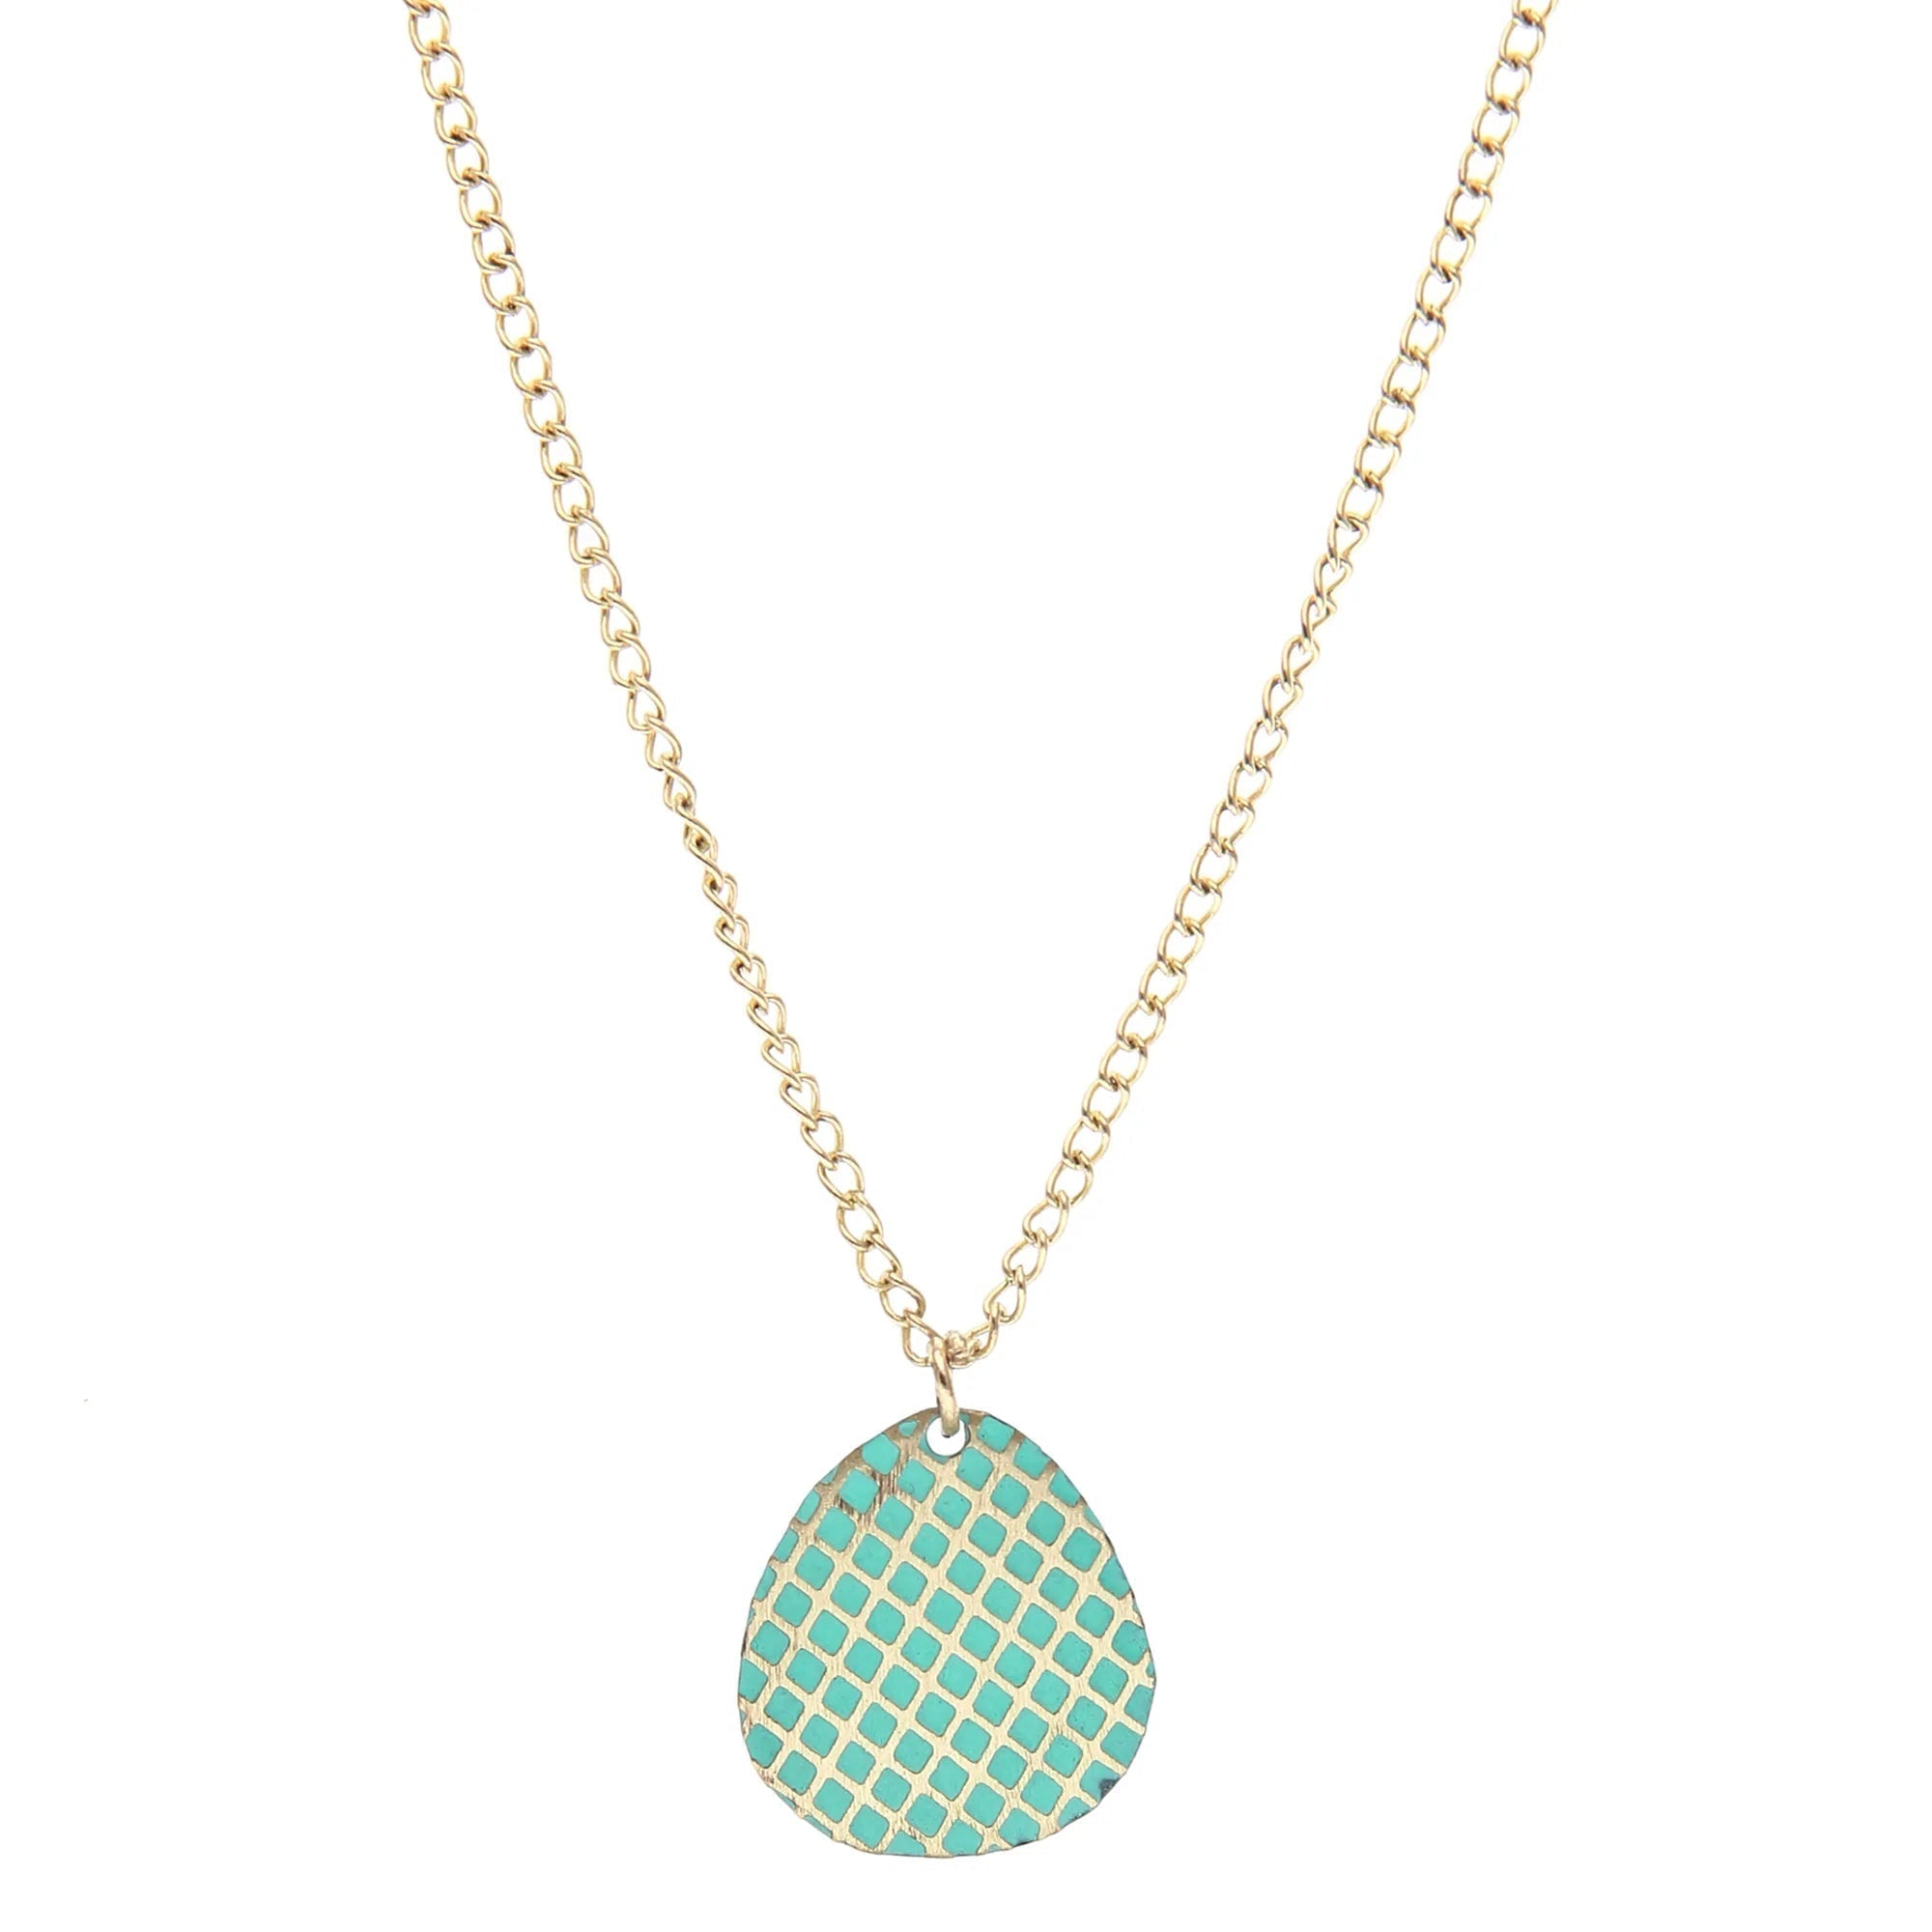 Green Maya Necklace - The Nancy Smillie Shop - Art, Jewellery & Designer Gifts Glasgow